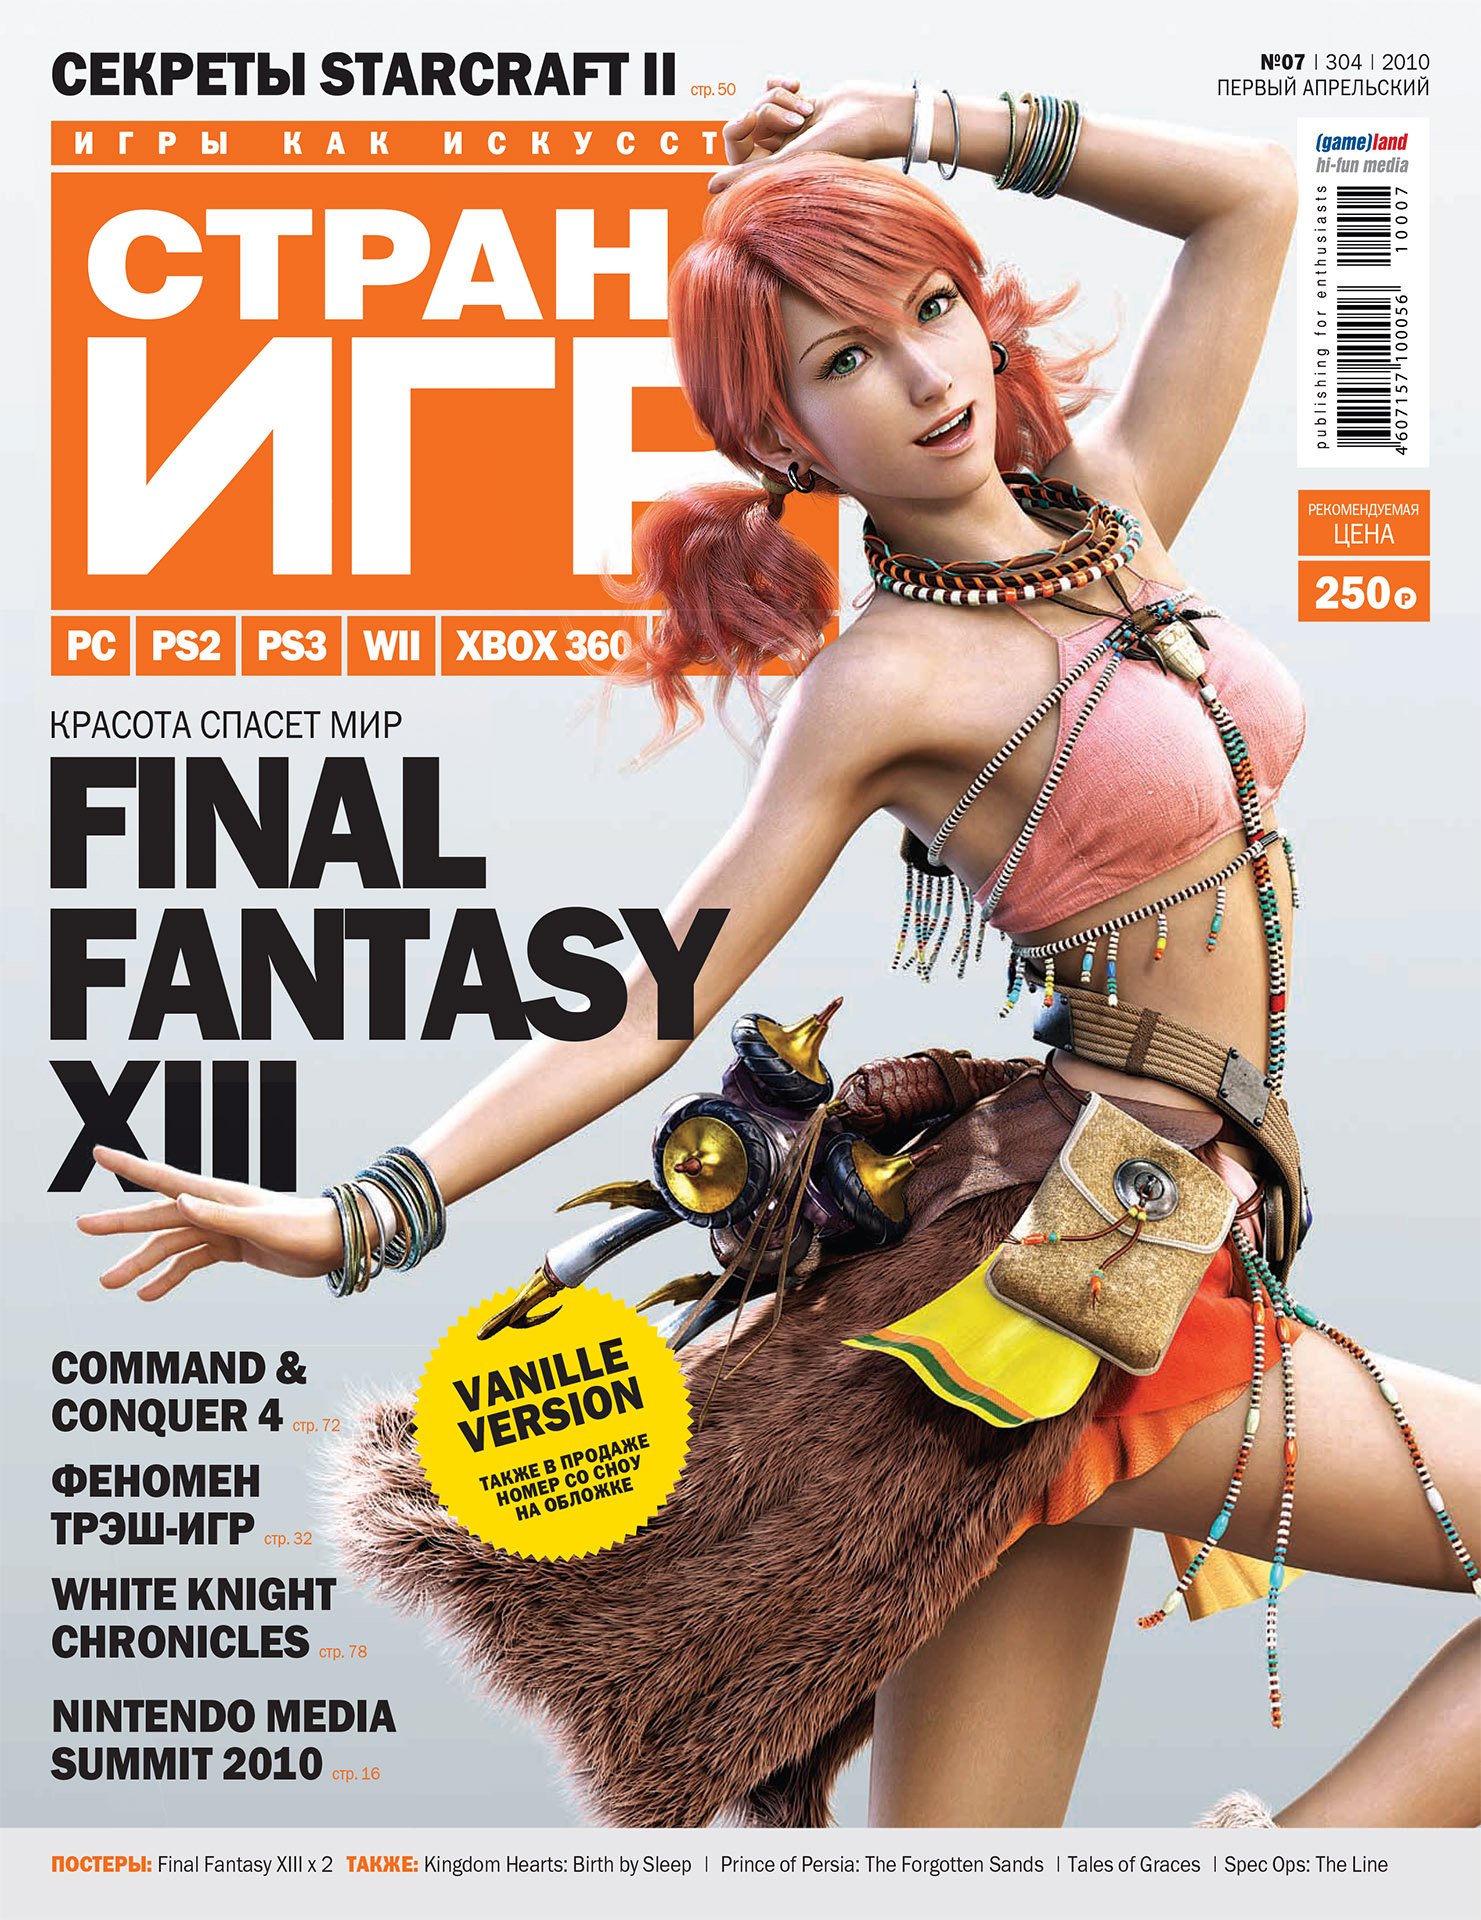 GameLand 304 April 2010 (cover 2)